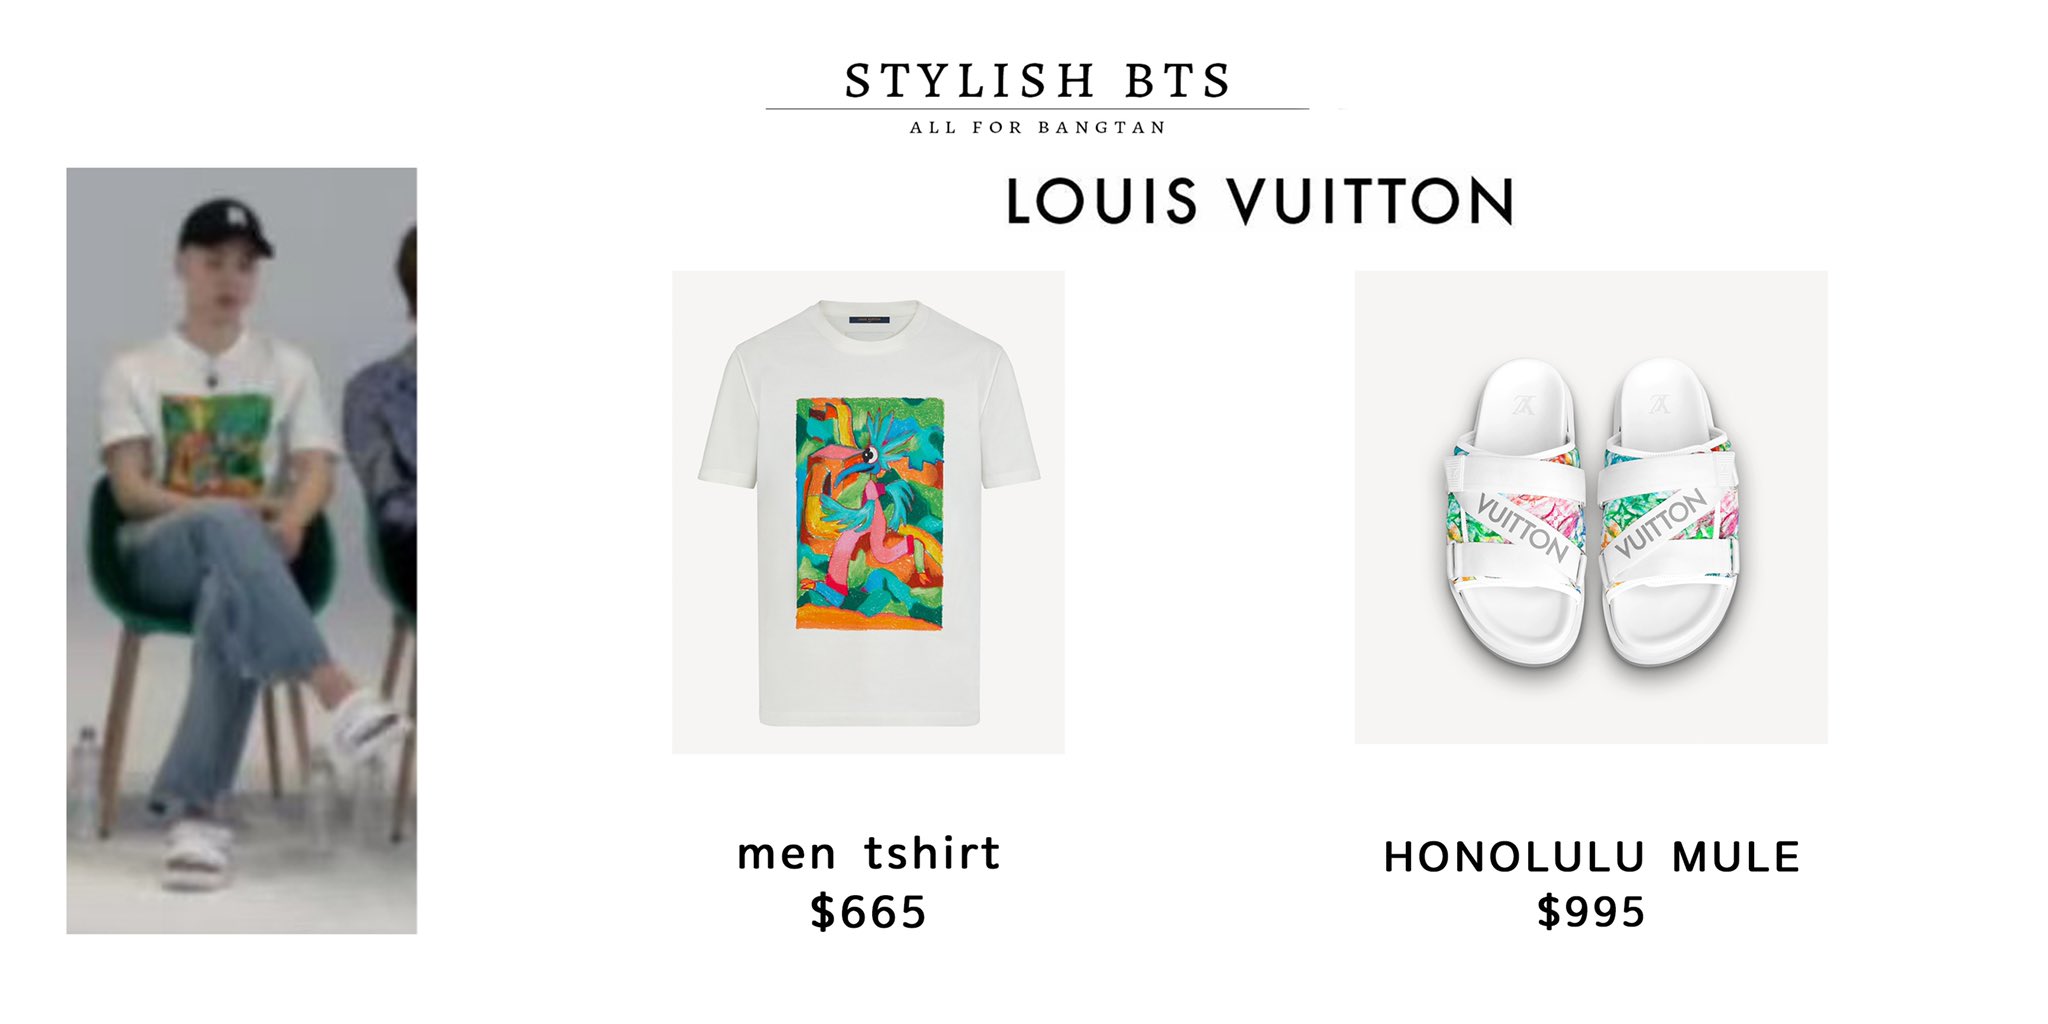 Louis Vuitton Bts Instagram  Natural Resource Department